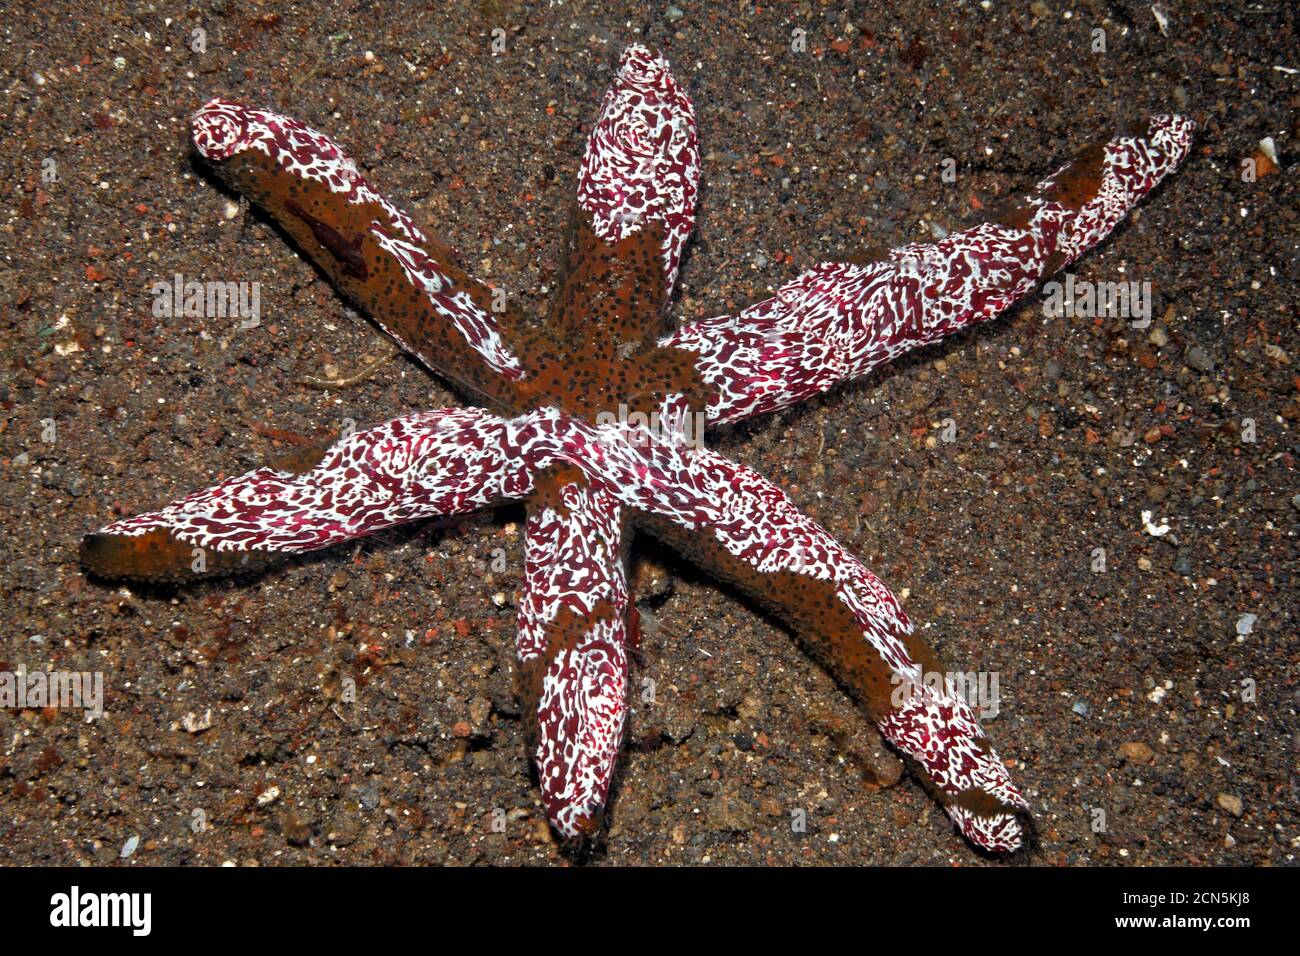 Ctenophore, or Comb Jellies, Coeloplana astericola, living on a sea star, Echinaster luzonicus. Tulamben, Bali, Indonesia. Stock Photo